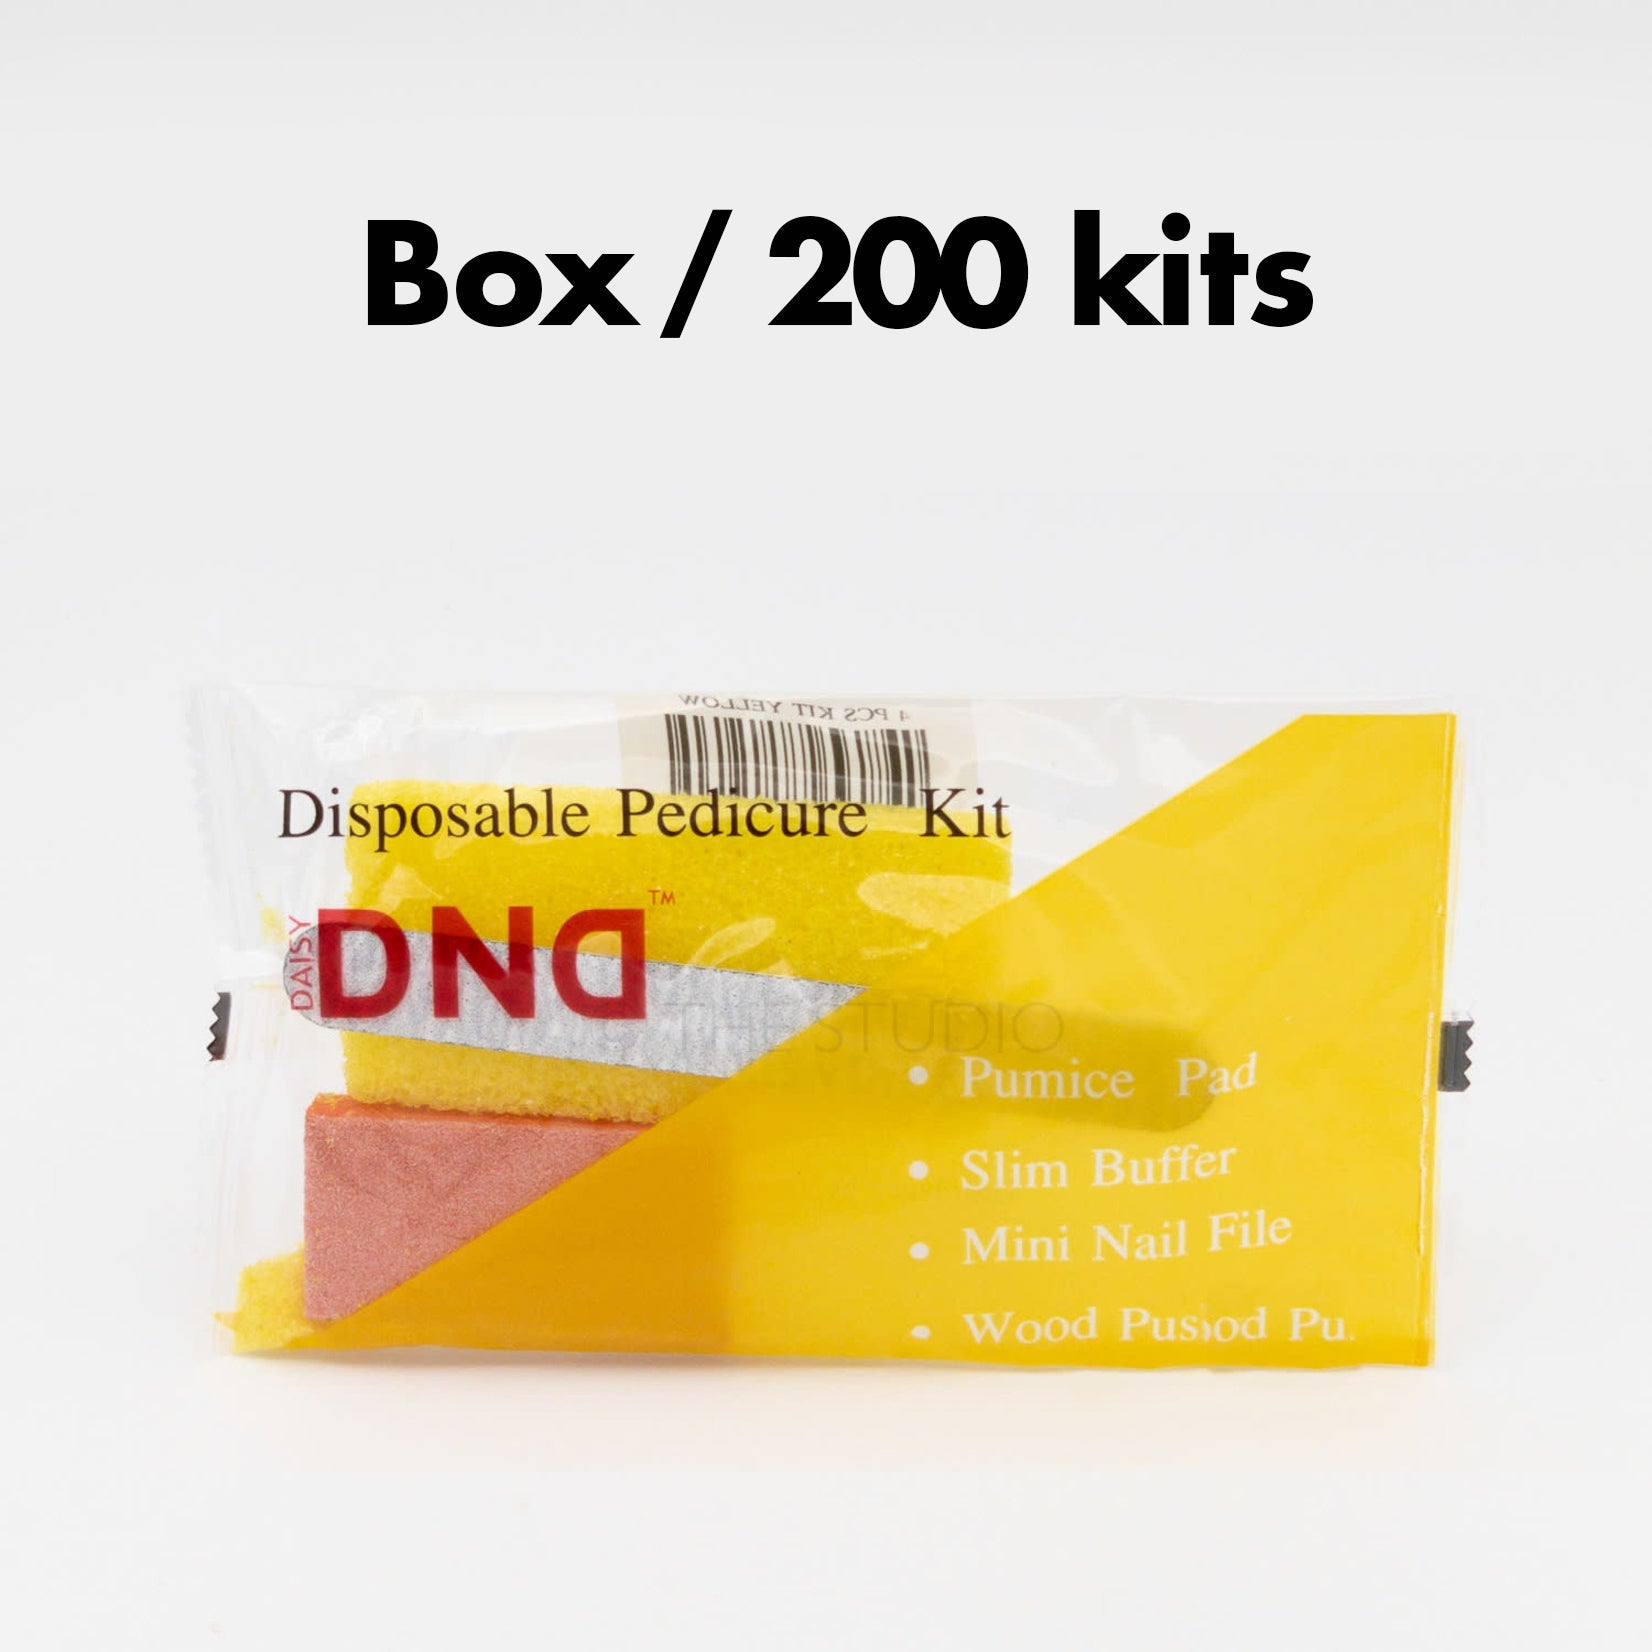 DND - Disposable Pedicure Kit - 10 ct